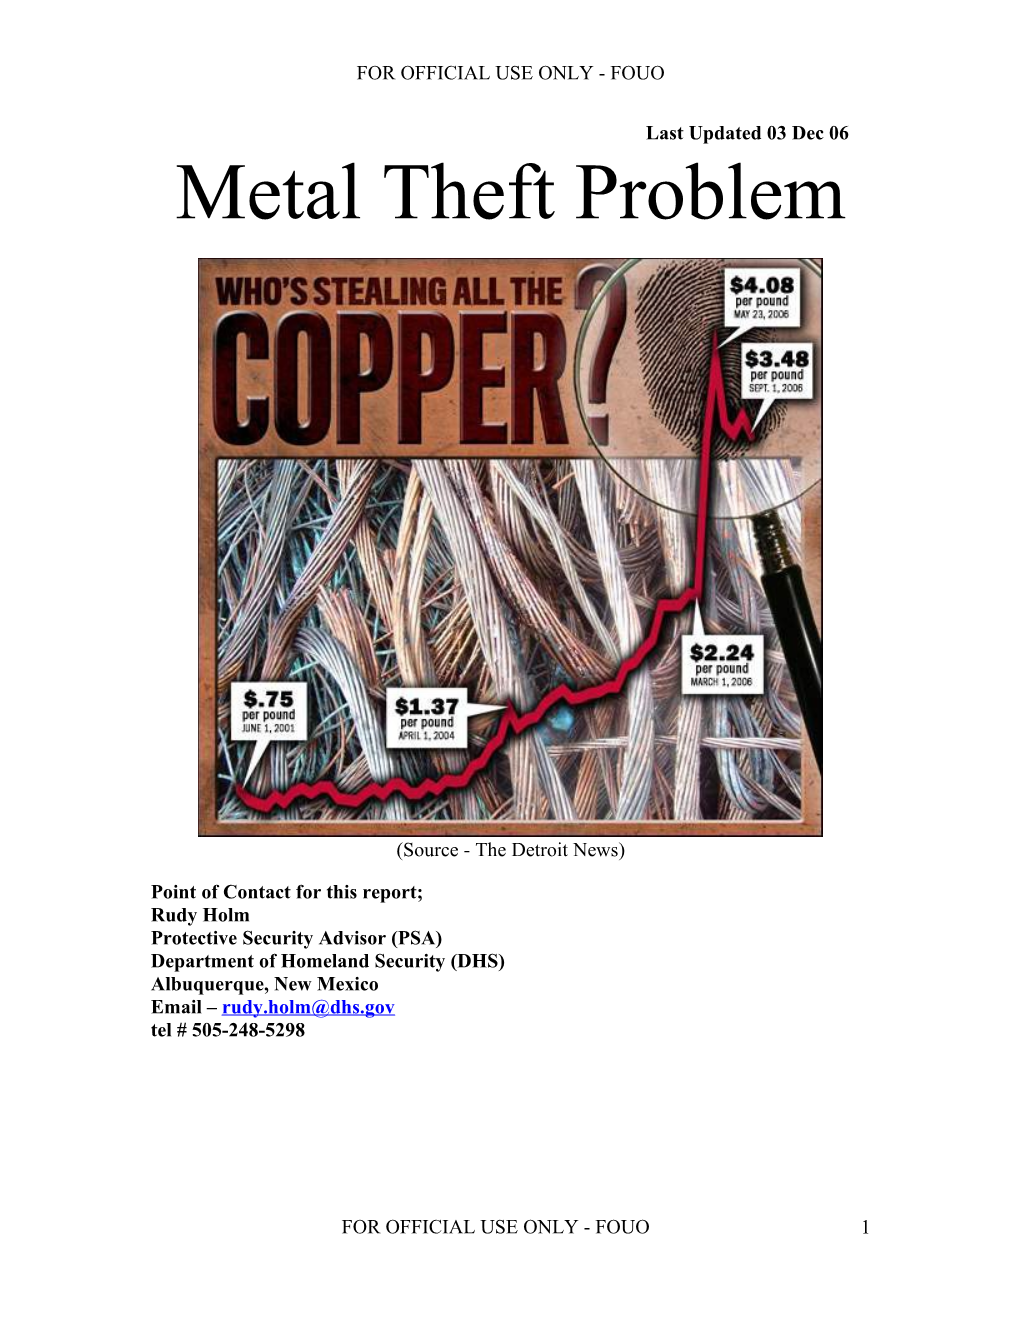 Copper Theft Problem